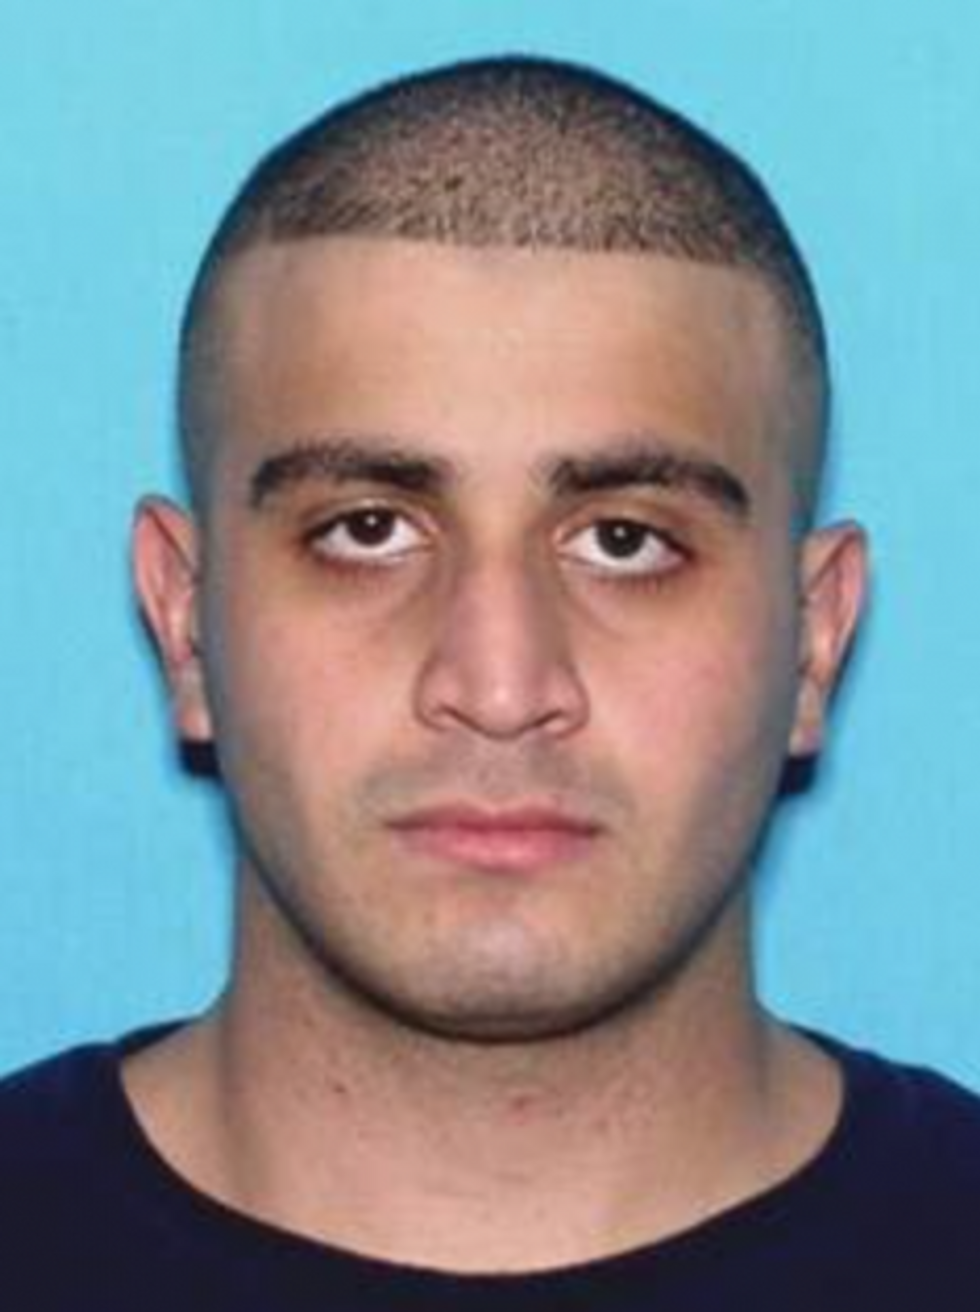 Court Documents, Interviews, FBI Reveal New Details About Orlando Terrorist